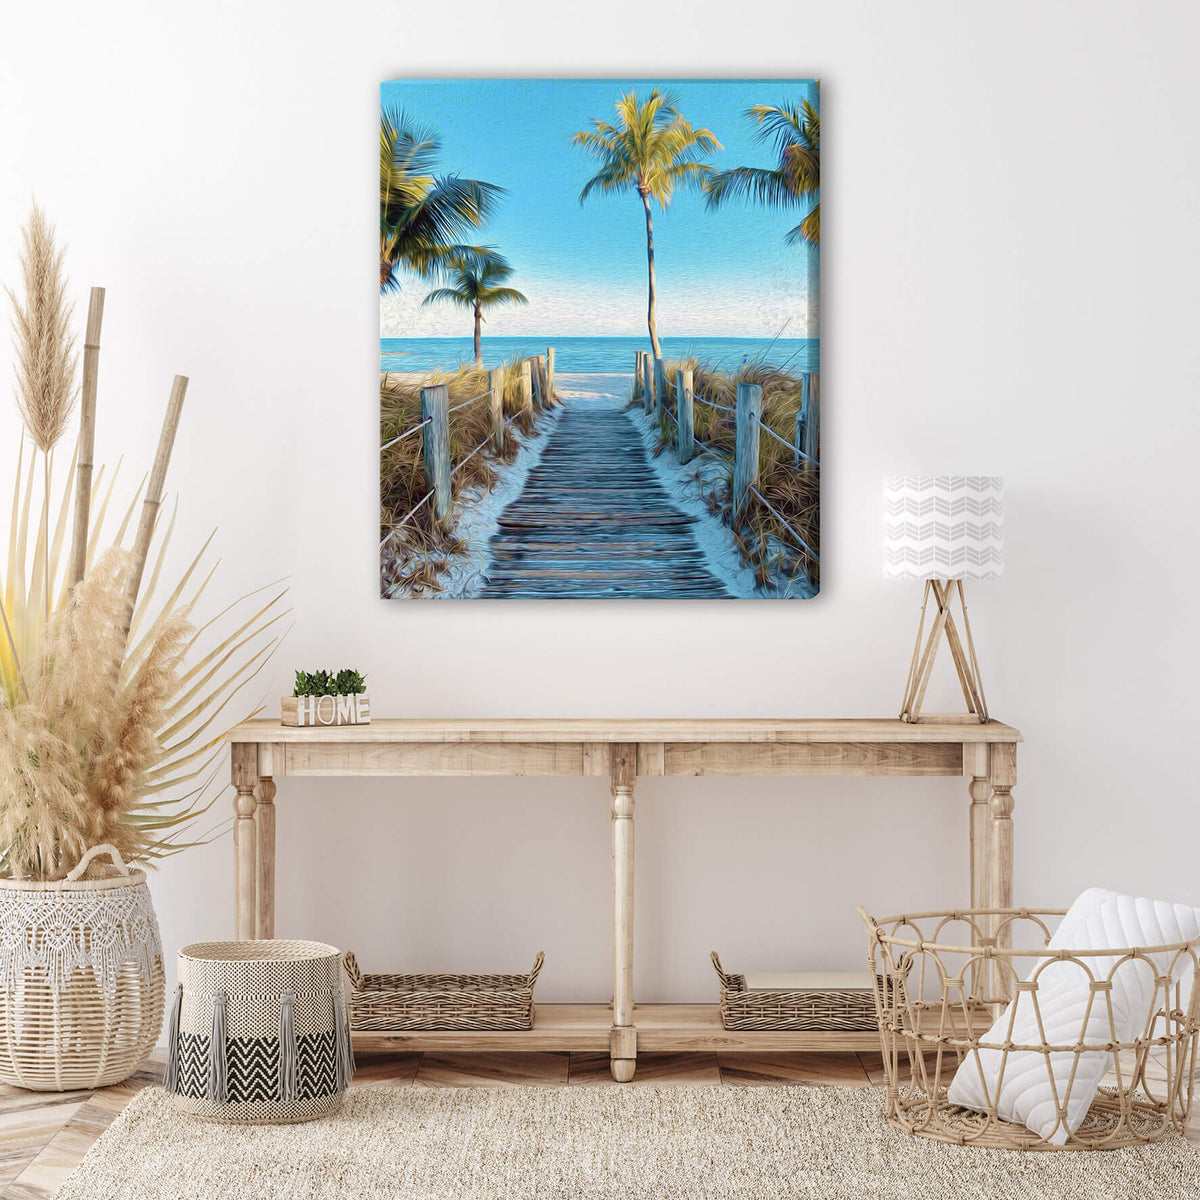 Beaches & Landmarks - Backyards of Key West Gallery